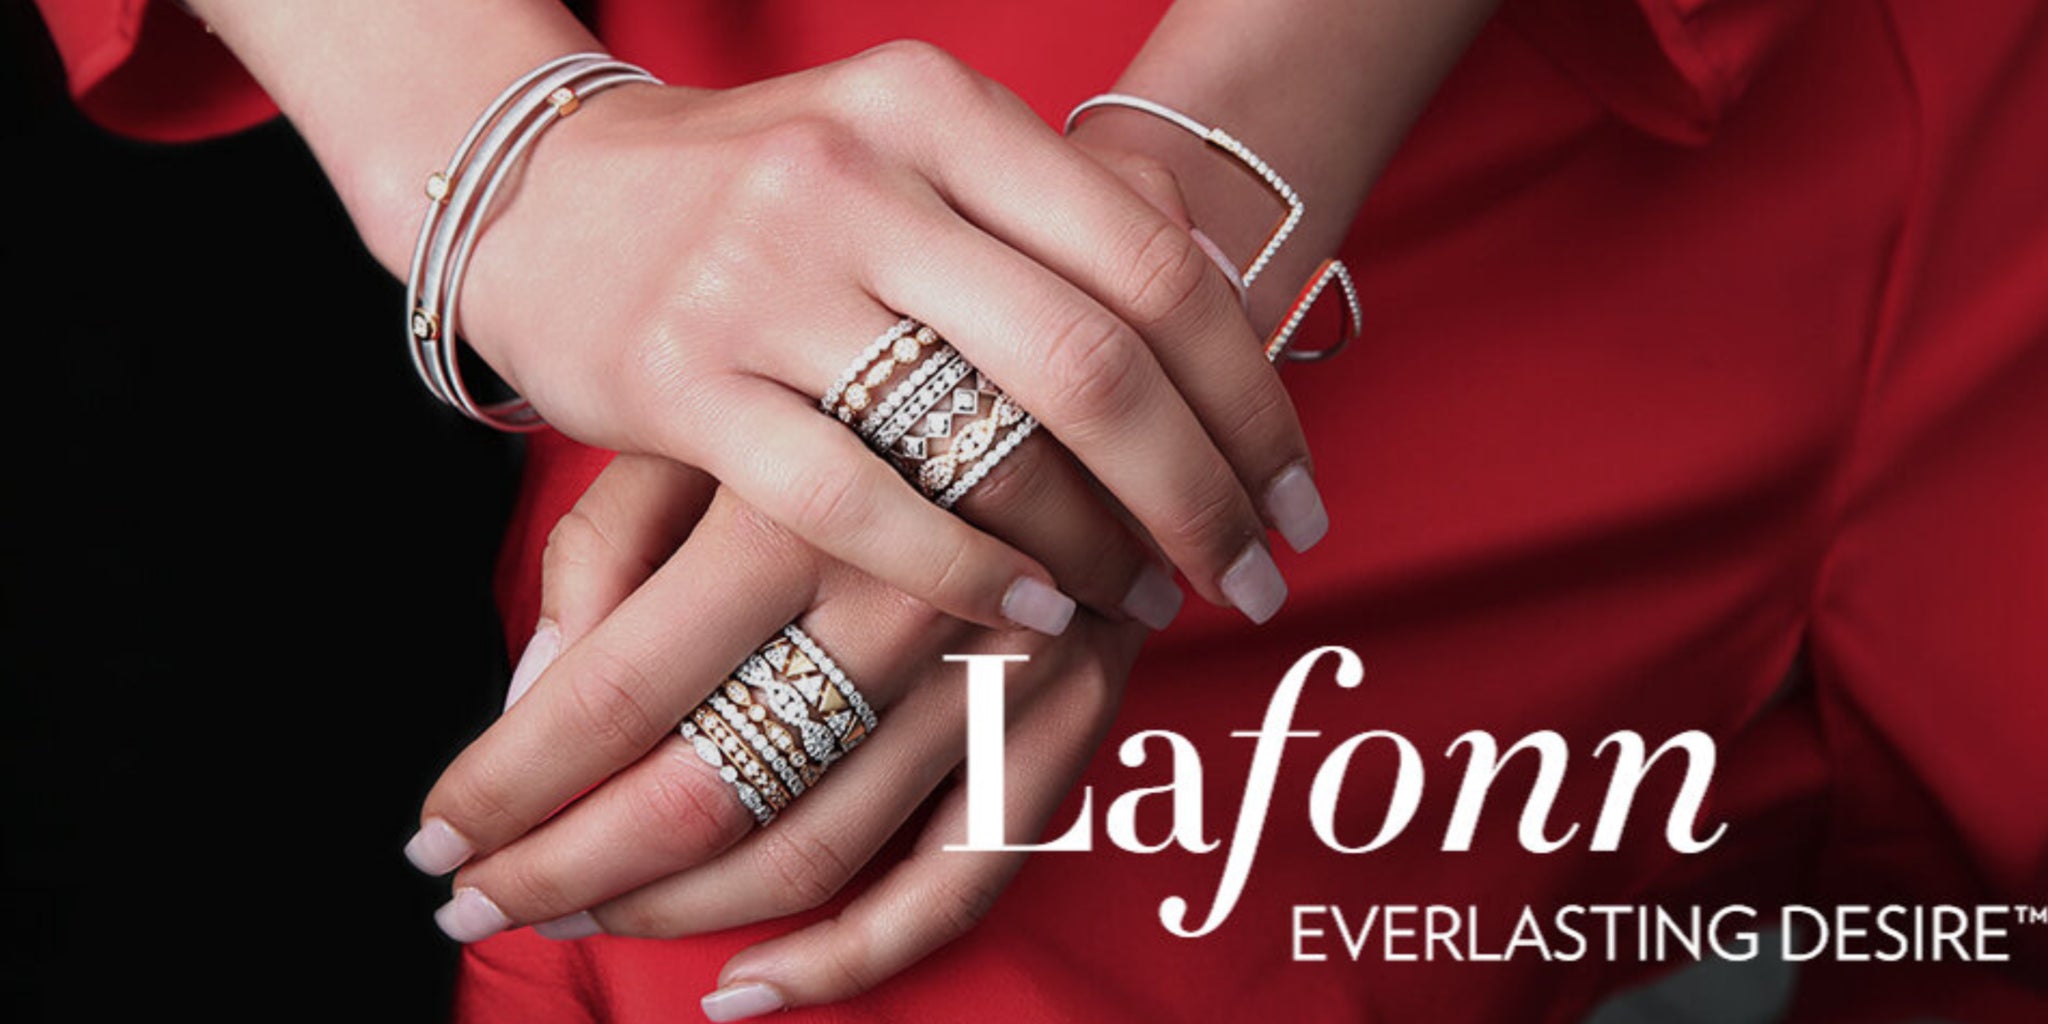 LaFonn Everlast Desire Jewelry Collection